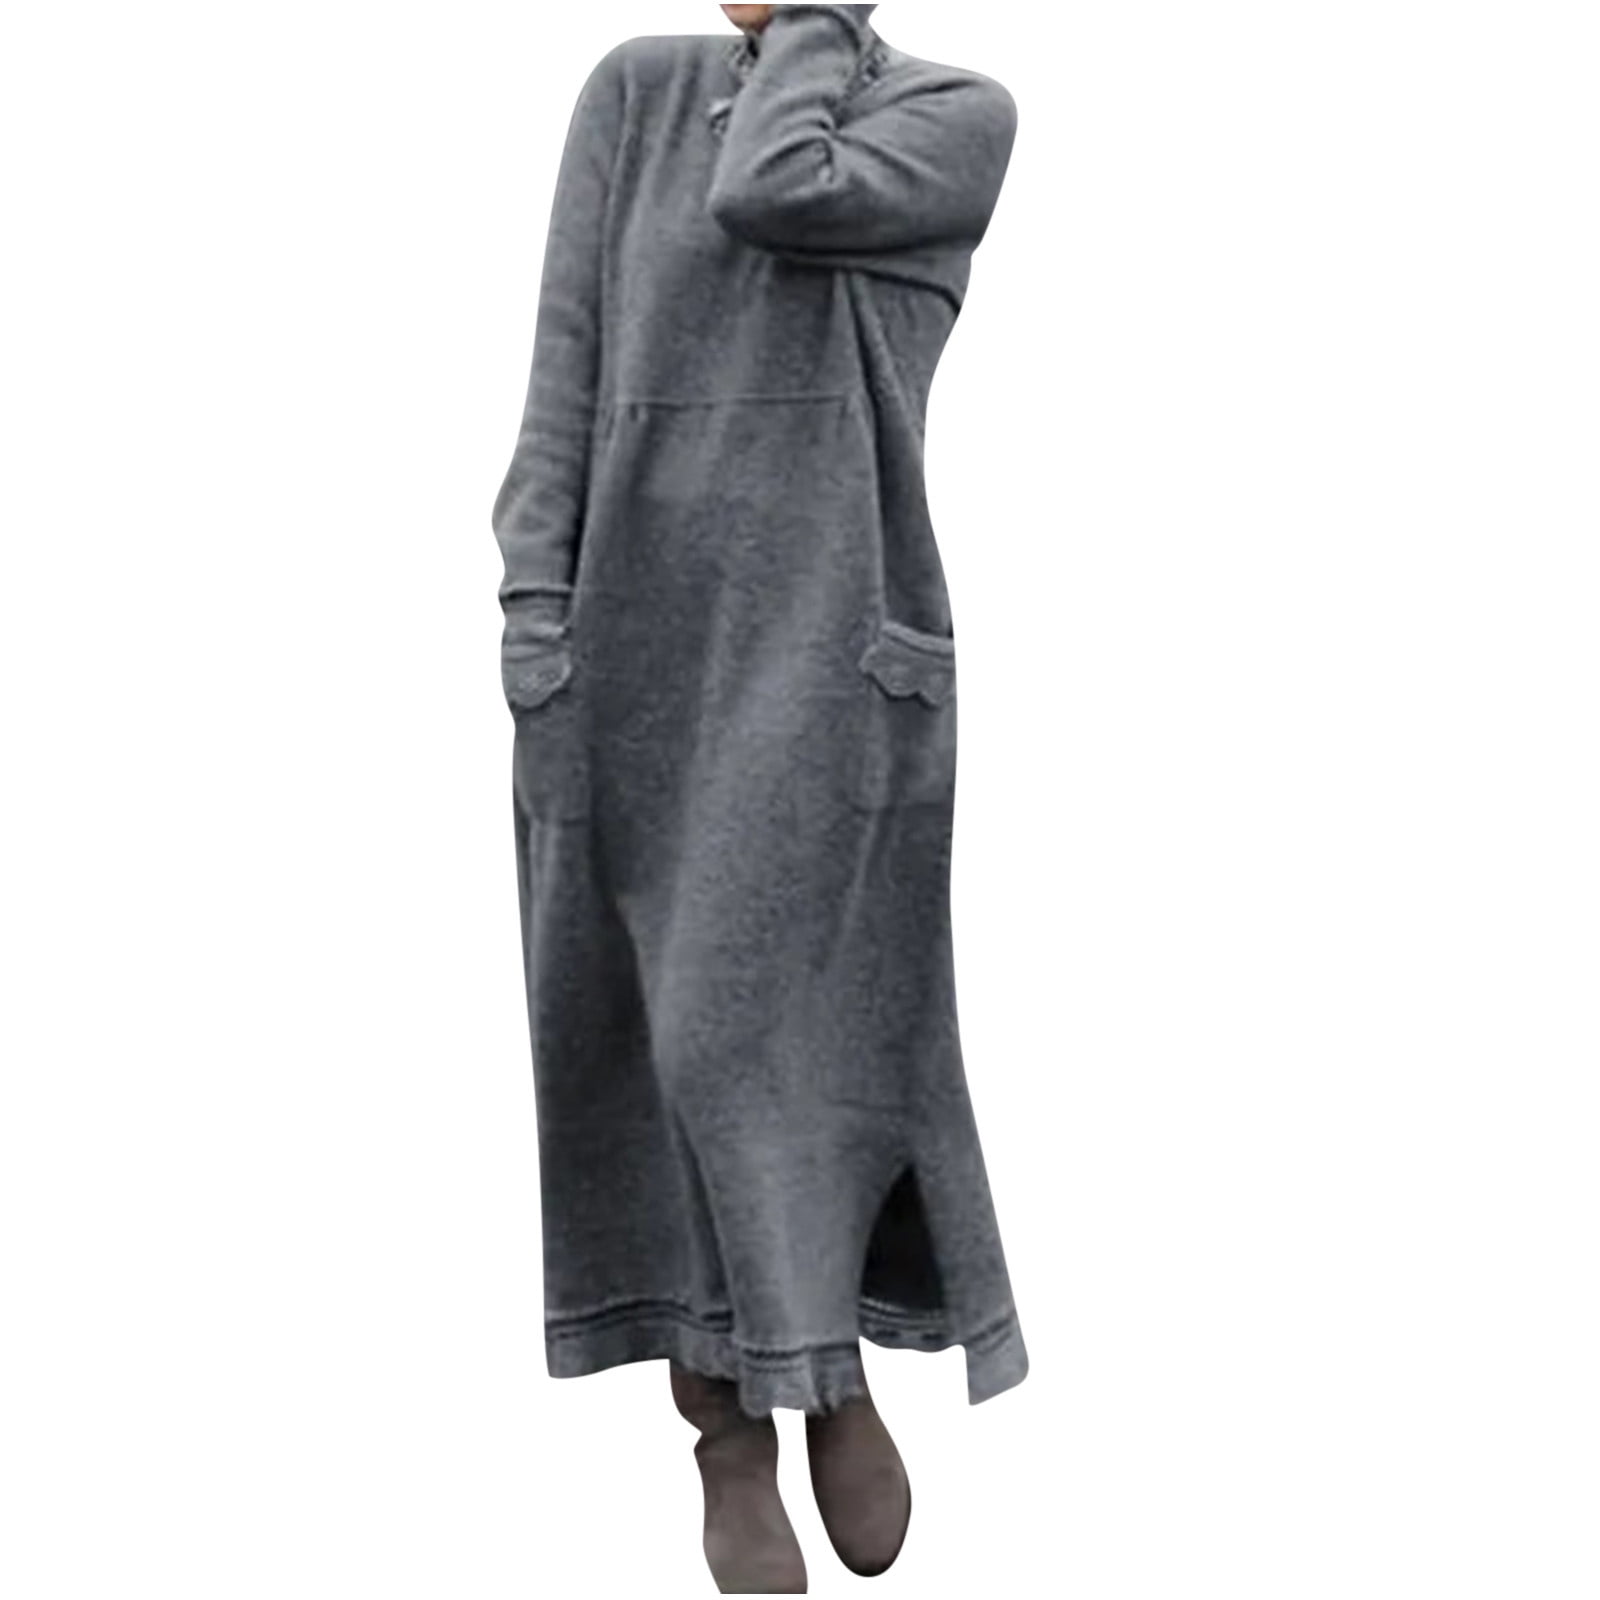 PULLIMORE Womens Winter Hoodie Dresses Slim Long Sleeve Pullover Sweatshirt  Dress with Pocket (L, Light Grey) 